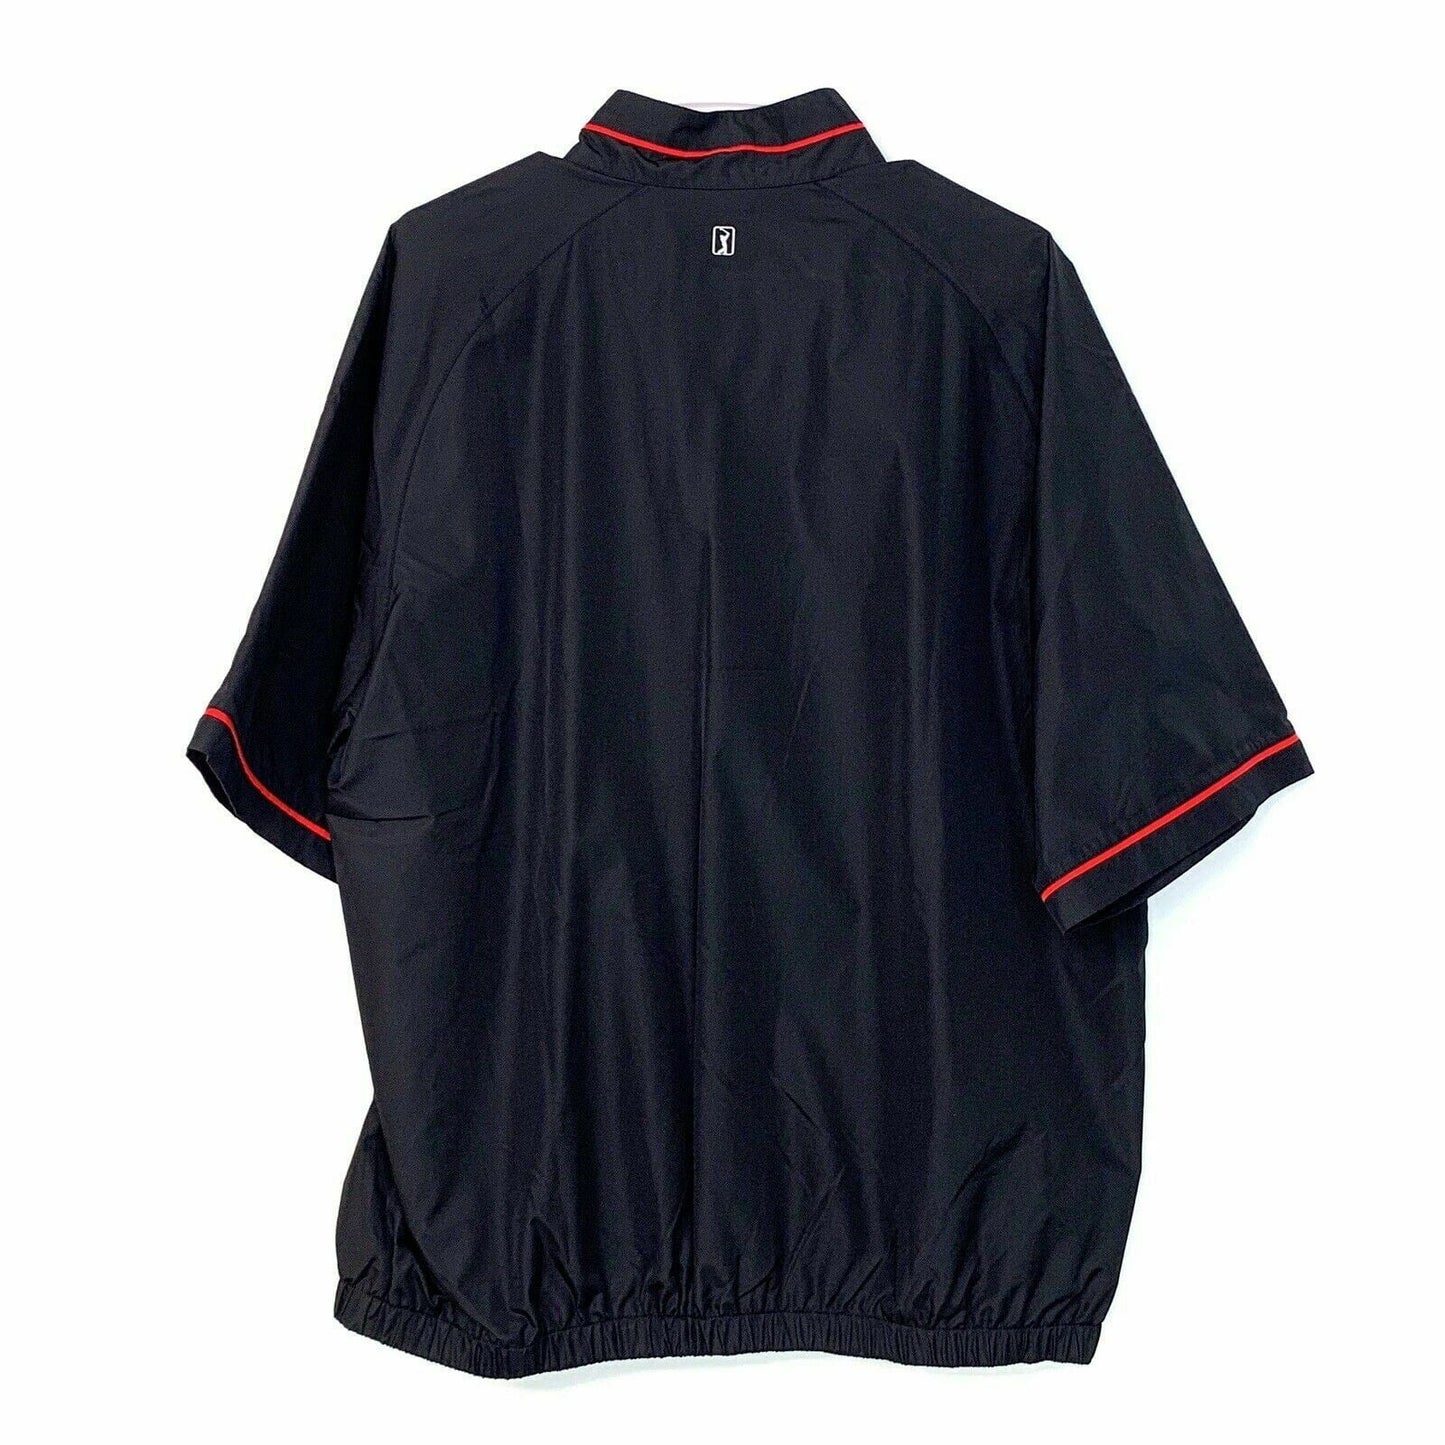 PGA Tour Mens Size L Black Red Golf Windbreaker Jacket Short Sleeve